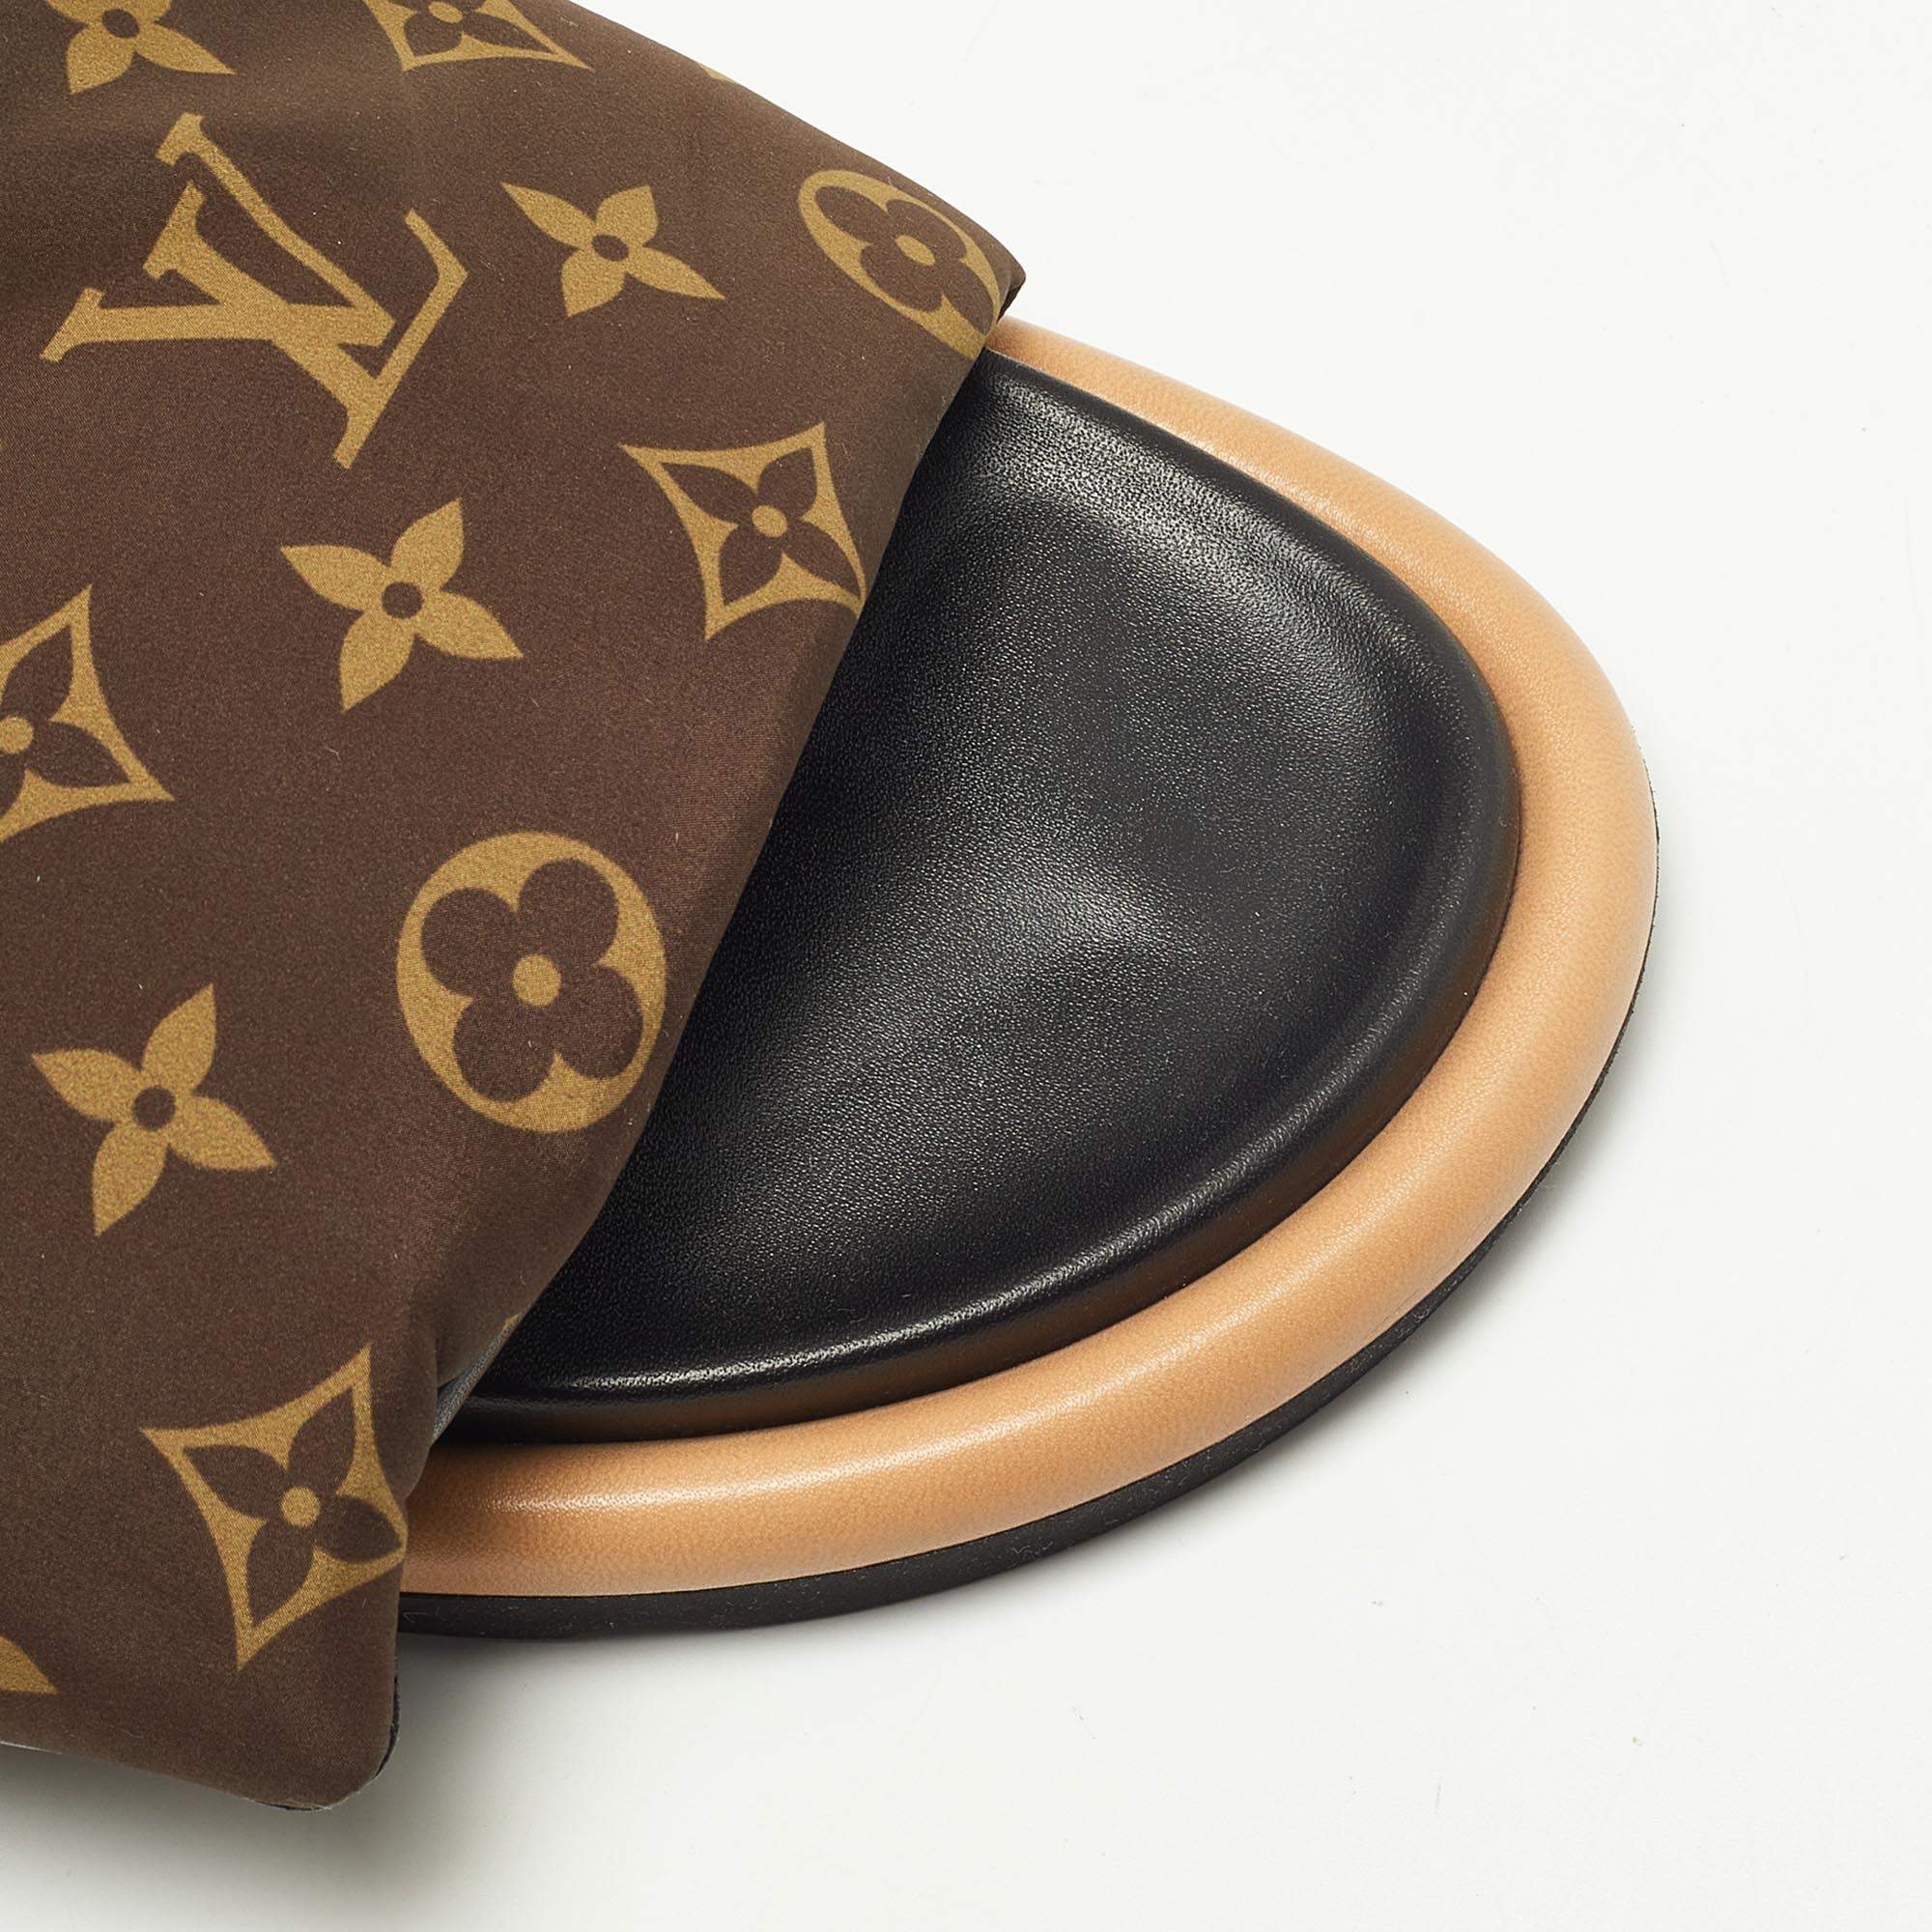 Louis Vuitton Pool Pillow comfort Slides, Luxury, Sneakers